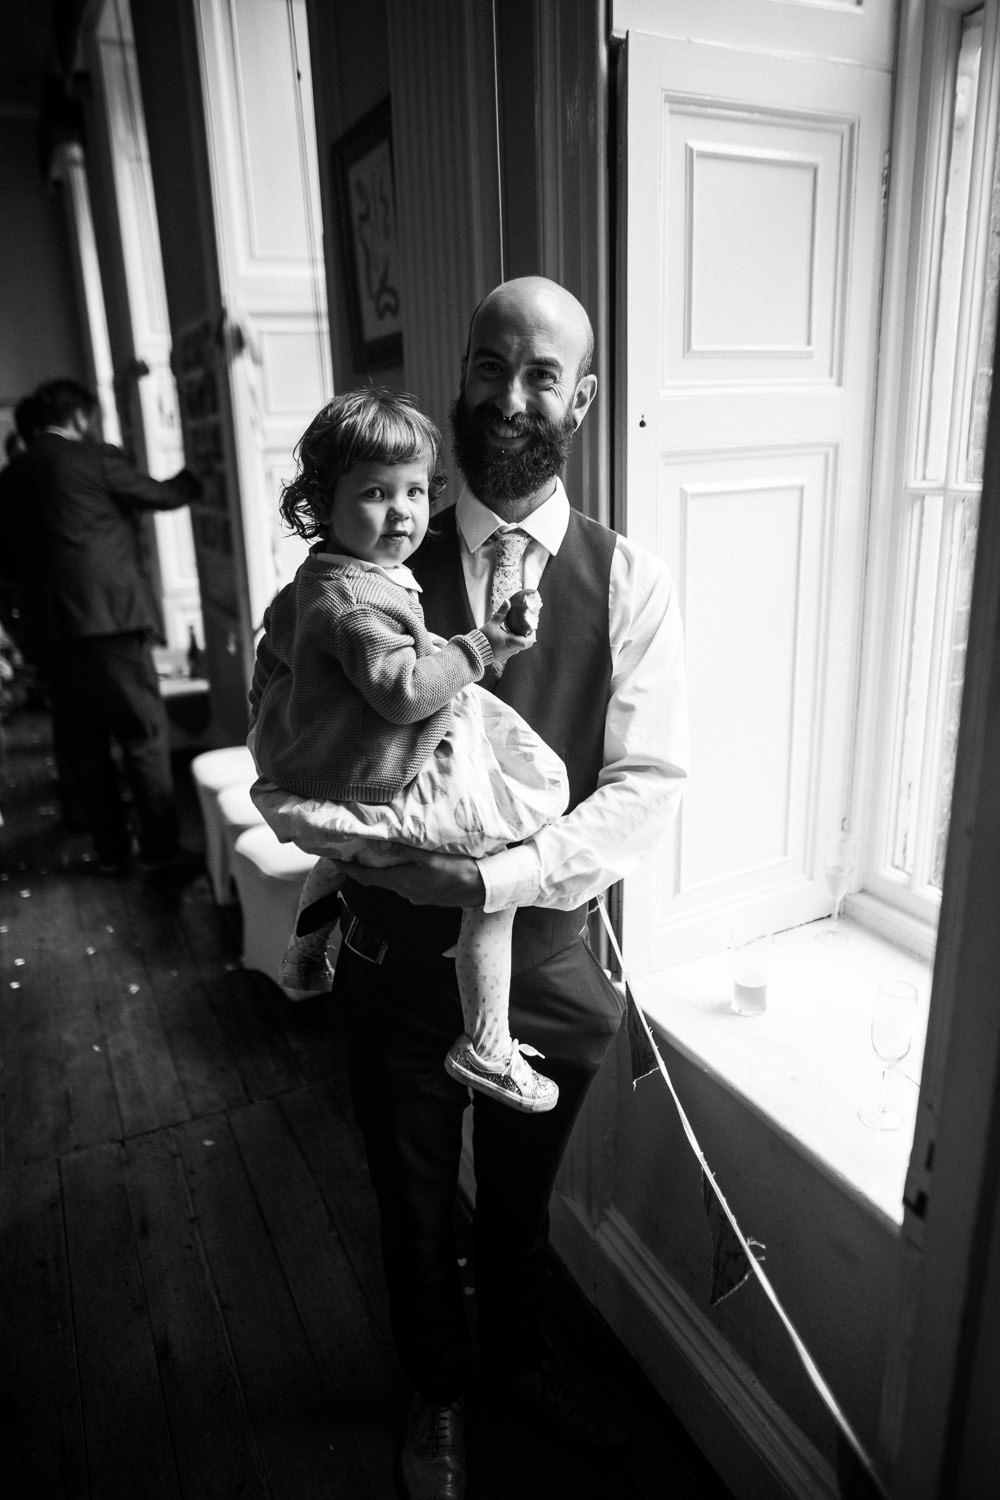 man with beard holding little girl in window light